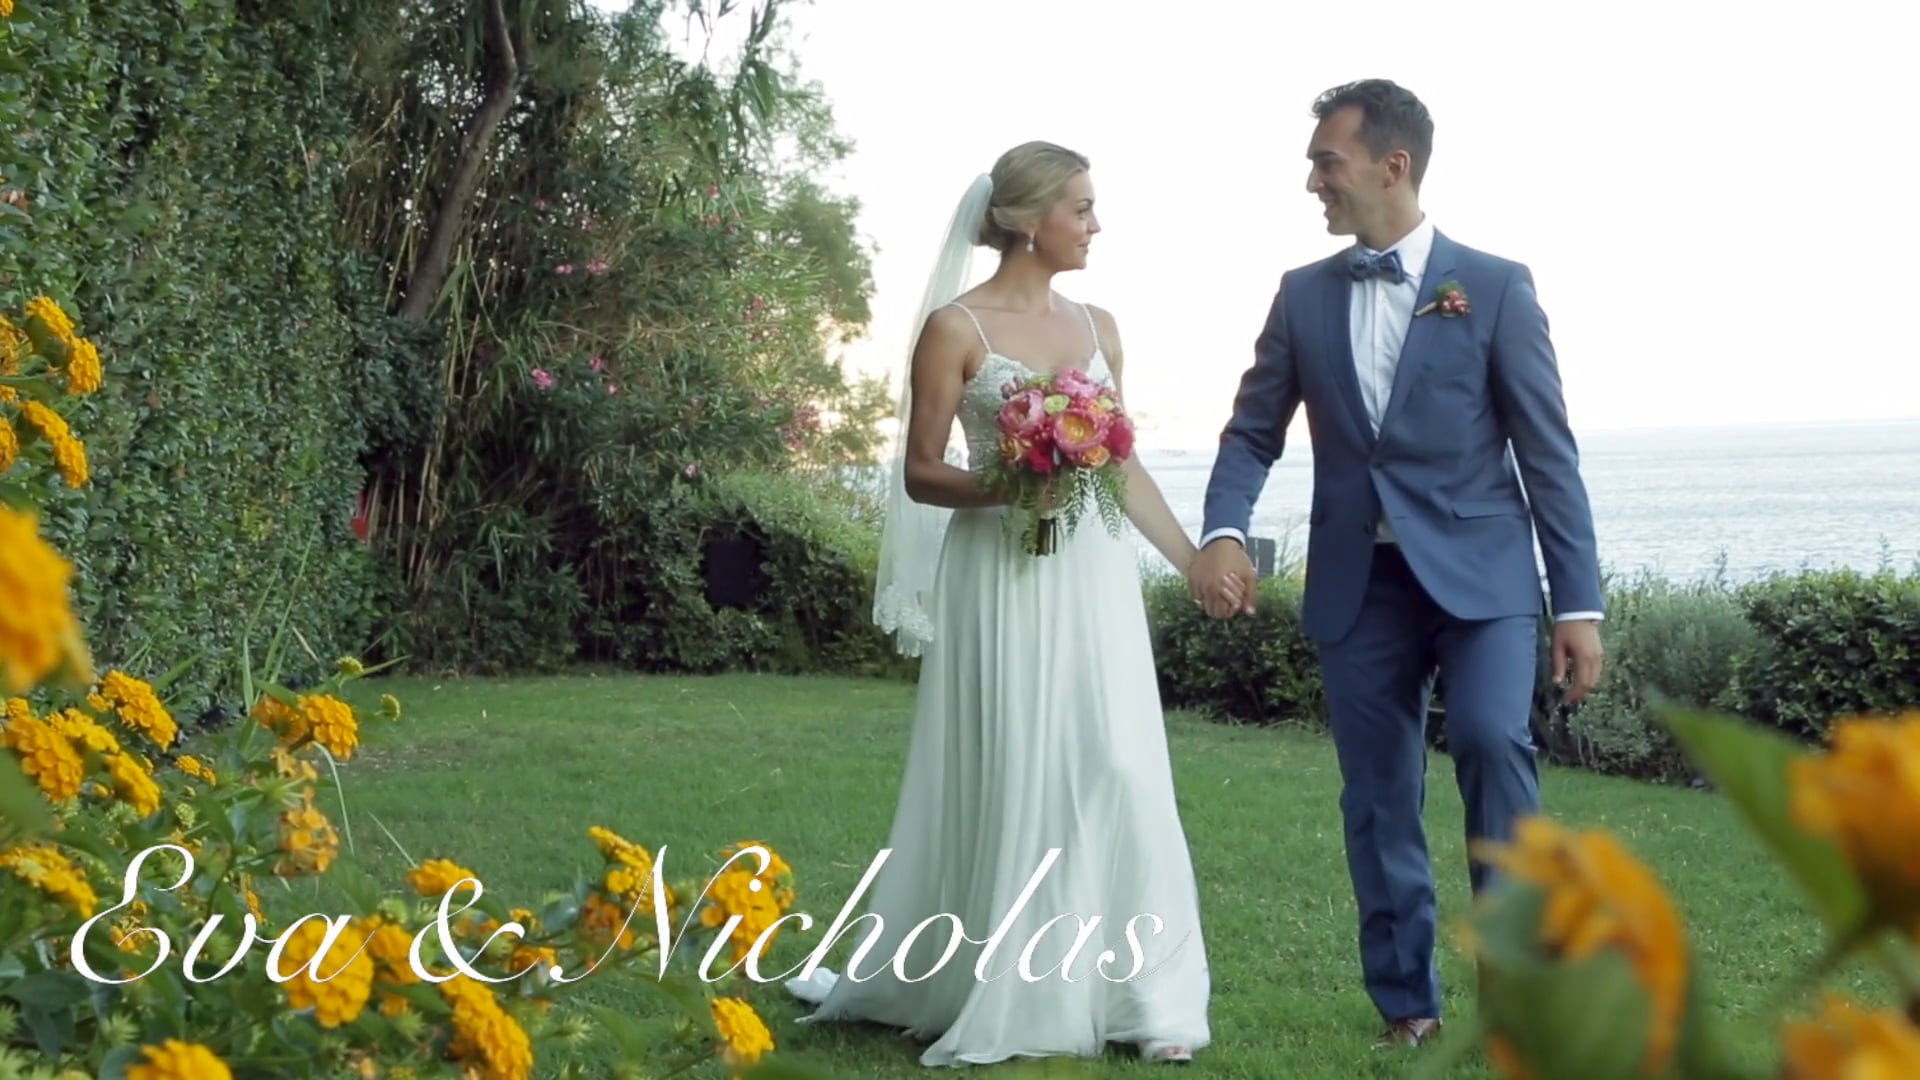 Eva & Nicholas wedding story in Island Athens Riviera